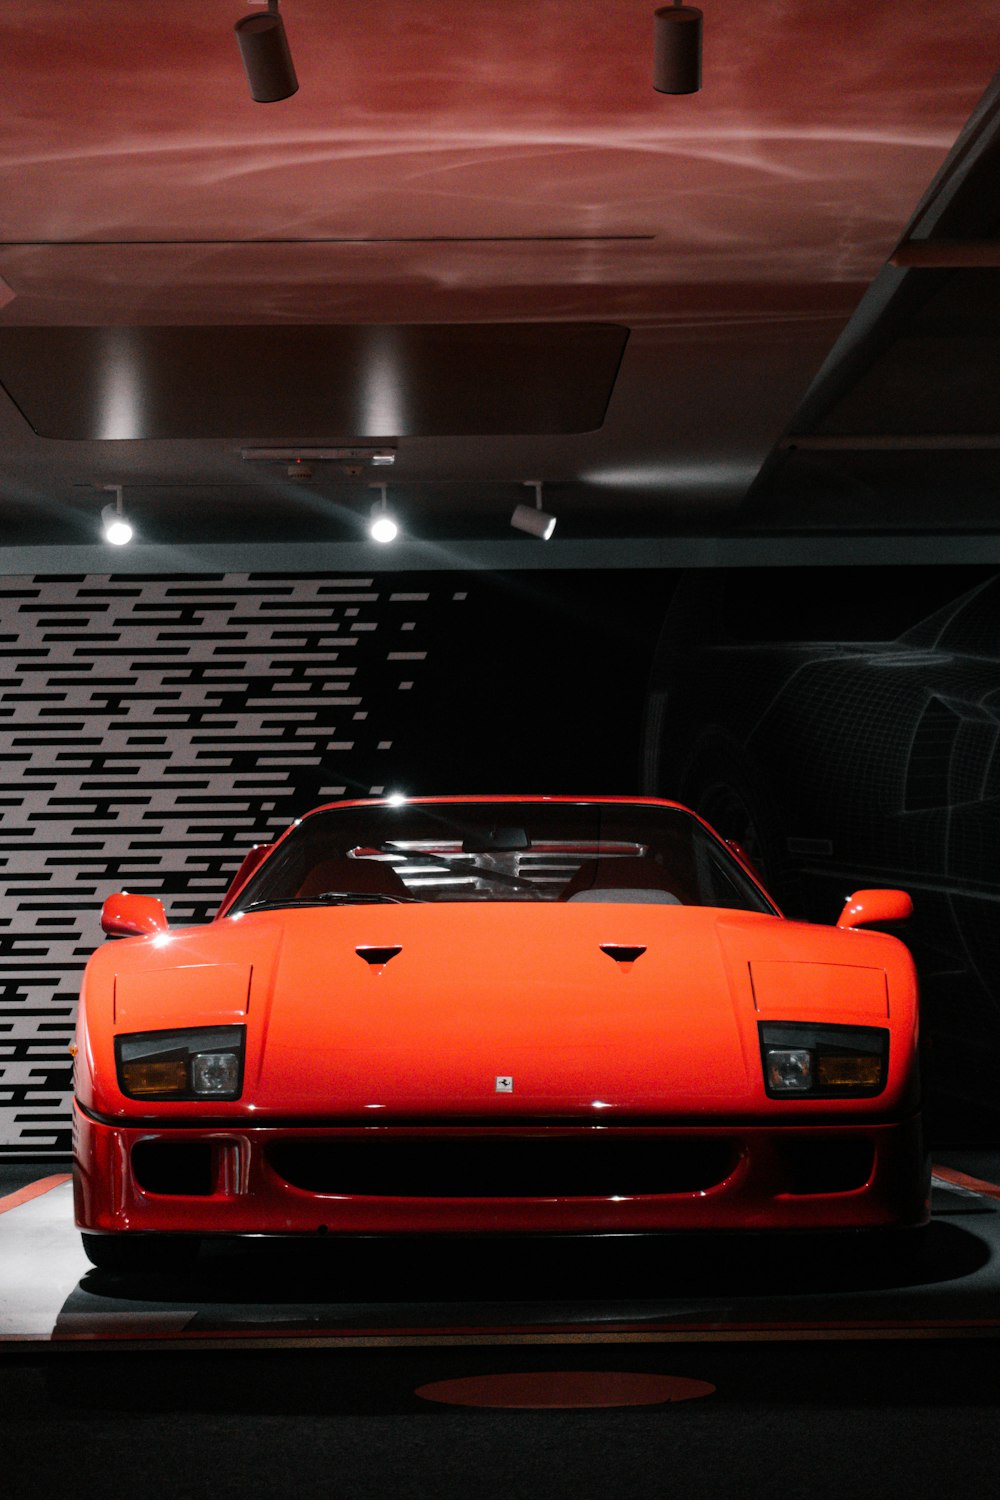 a red sports car